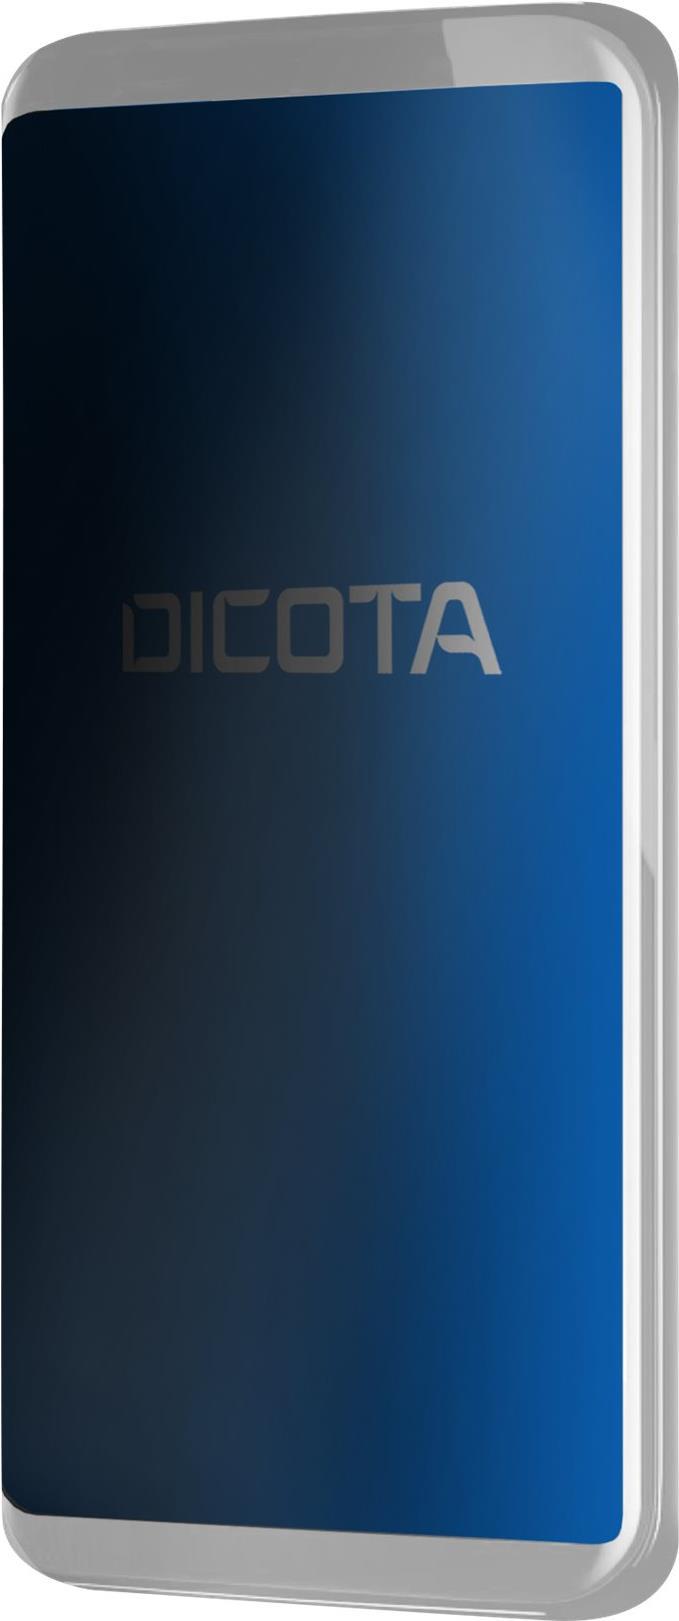 DICOTA Bildschirmschutz für Handy (D70464)